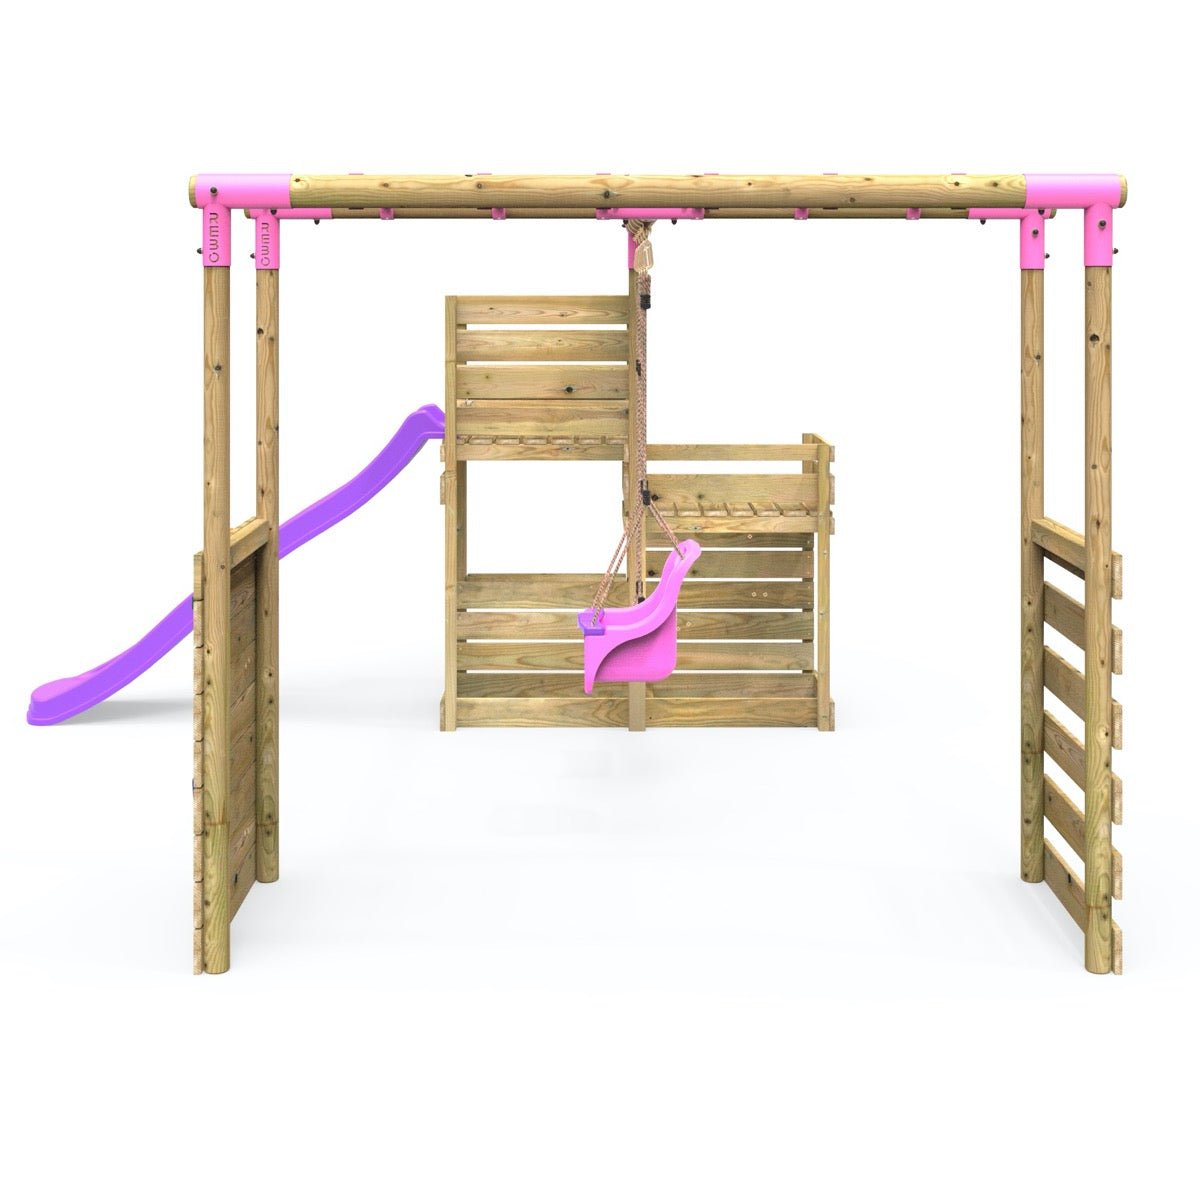 Rebo Wooden Swing Set plus Deluxe Deck, 8FT Slide & Monkey Bars - Luna Pink